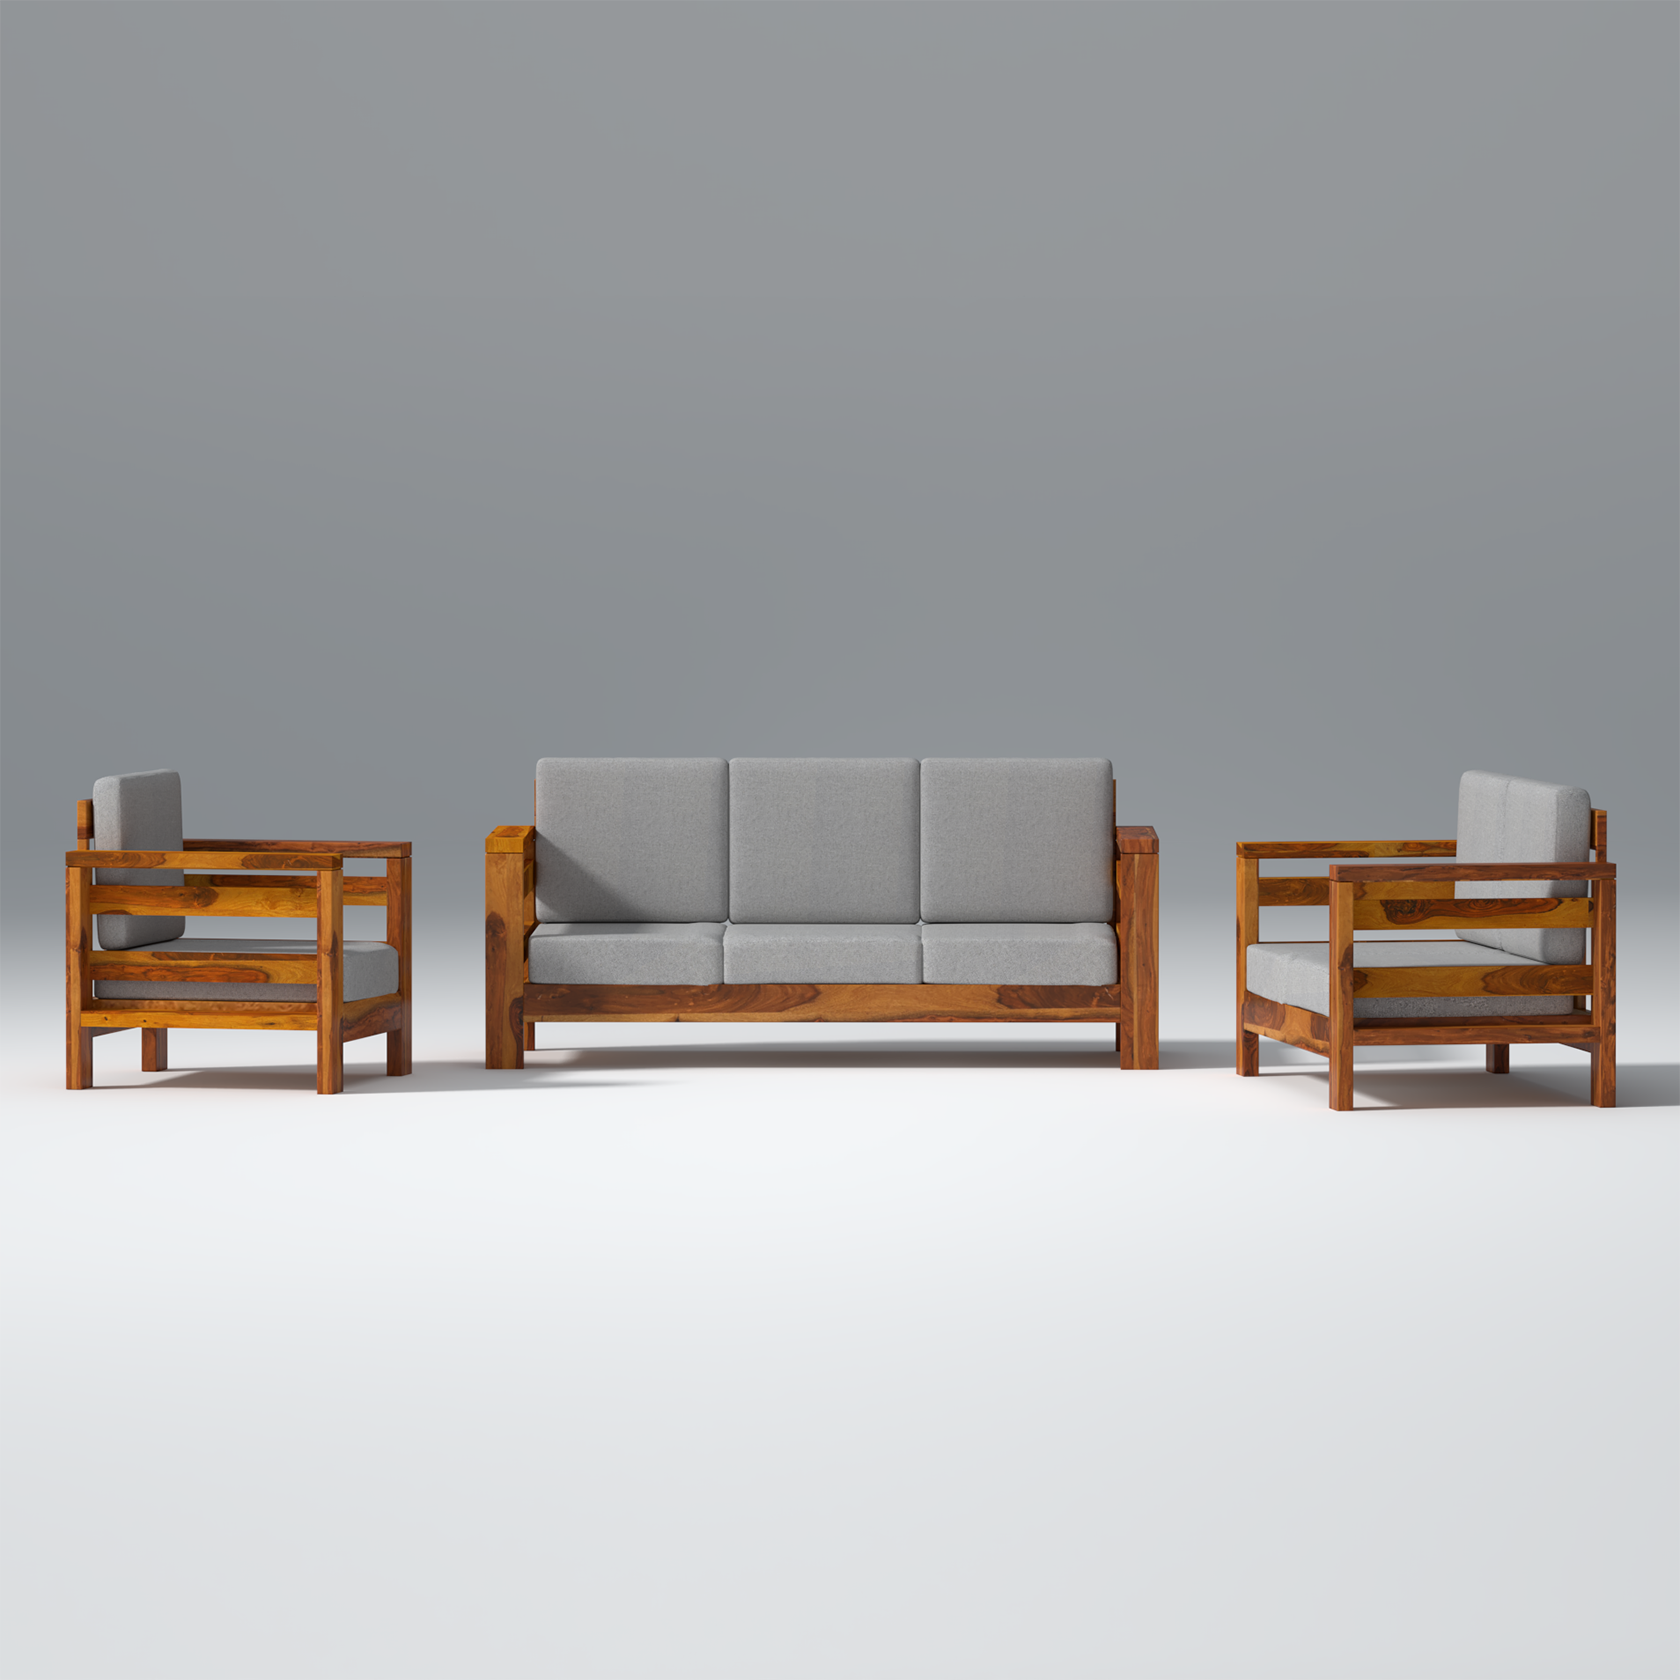 Eirini Elegance Sheesham Wood sofa In Light Honey Color